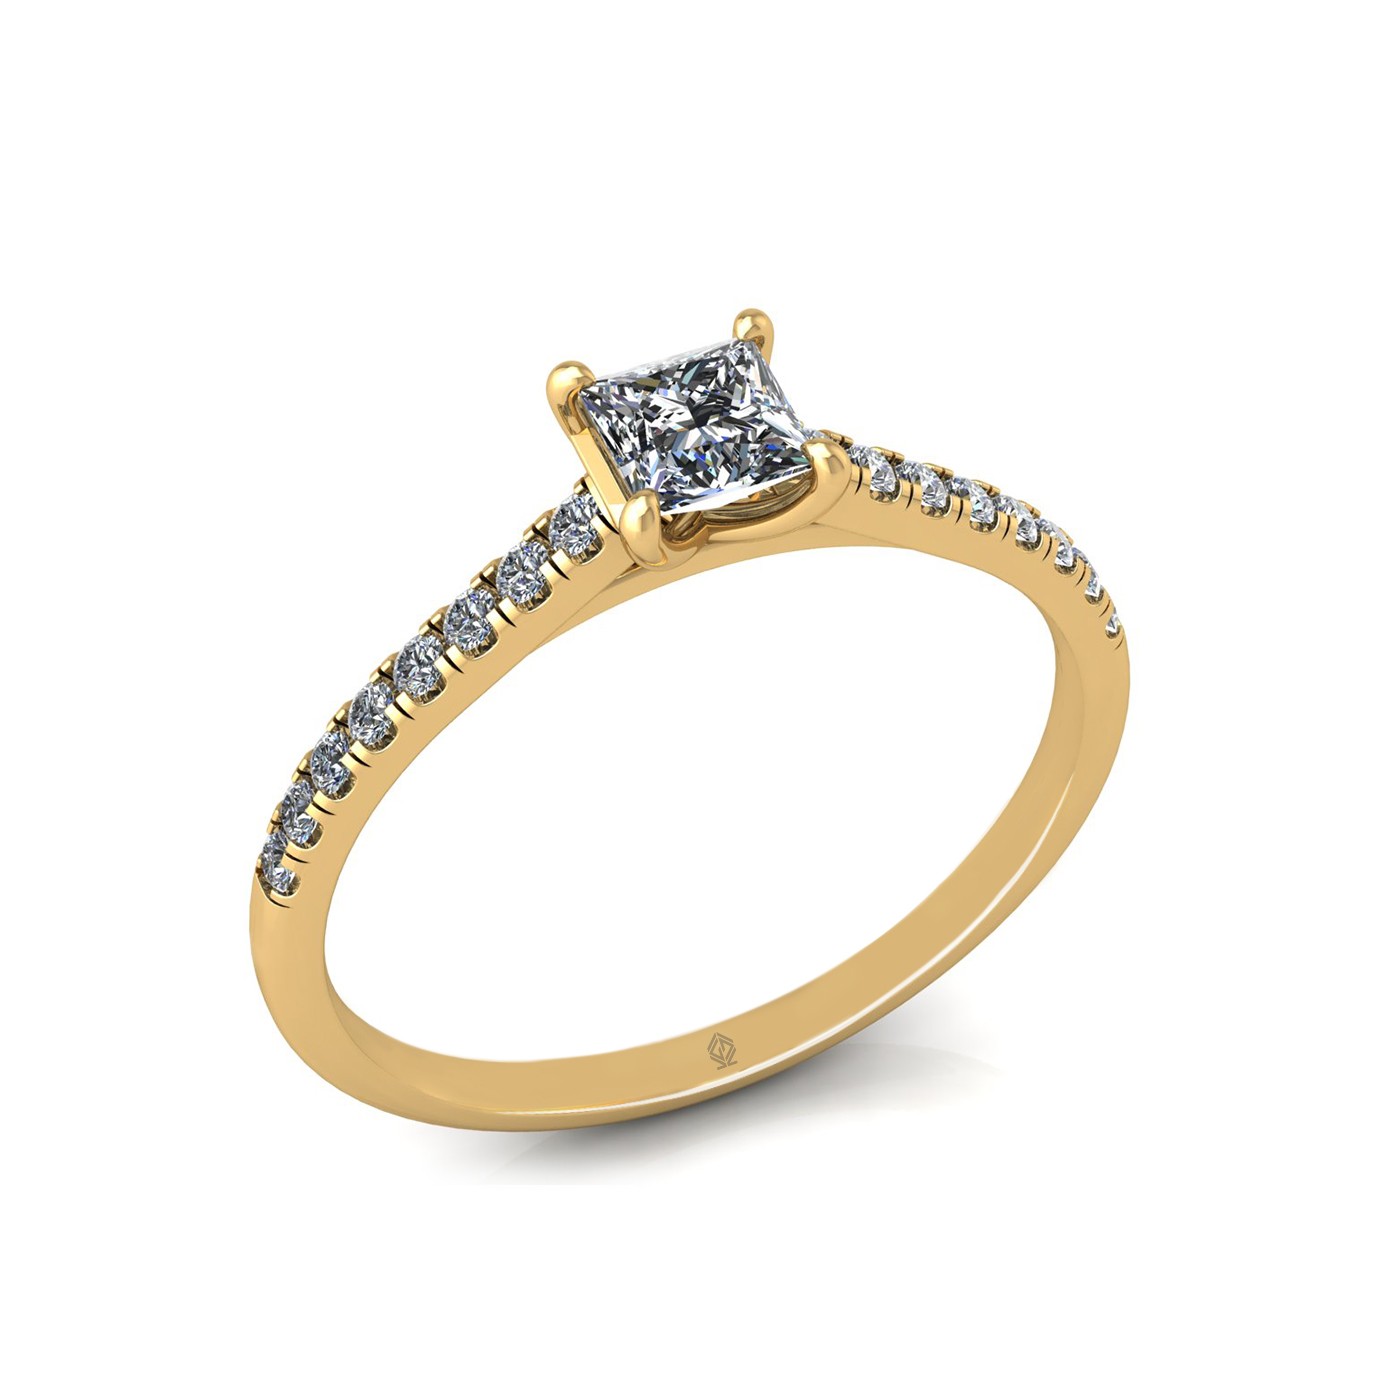 18k yellow gold  0,30 ct 4 prongs princess cut diamond engagement ring with whisper thin pavÉ set band